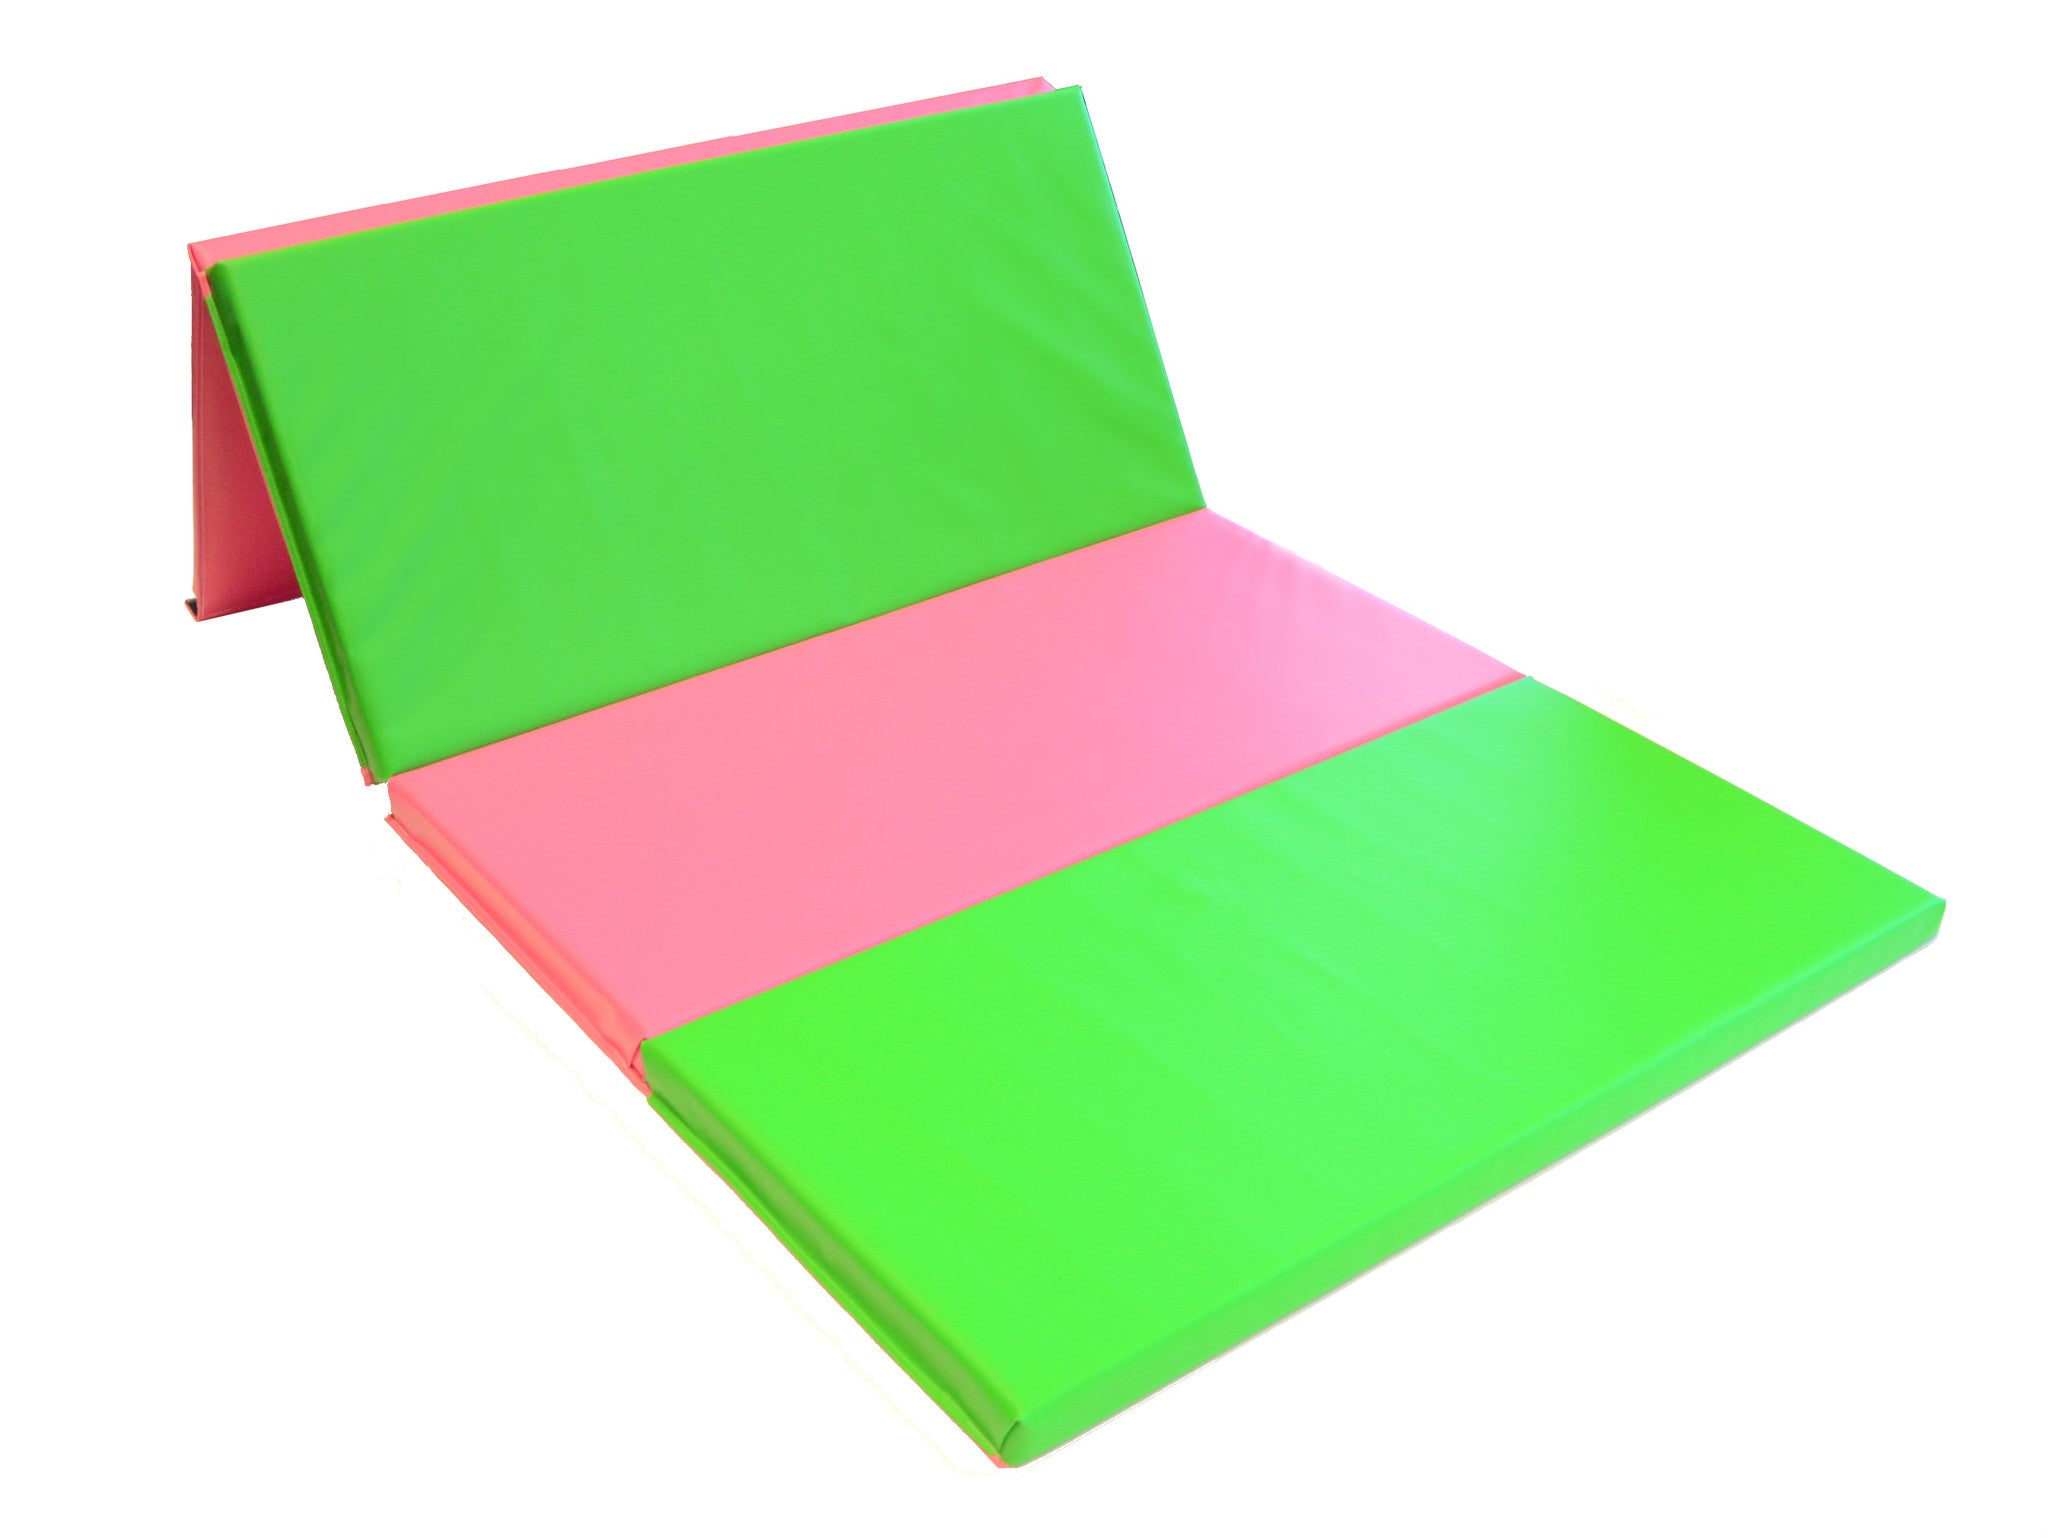 4' x 8' x 2" Intermediate Level Folding Gymnastics Mat